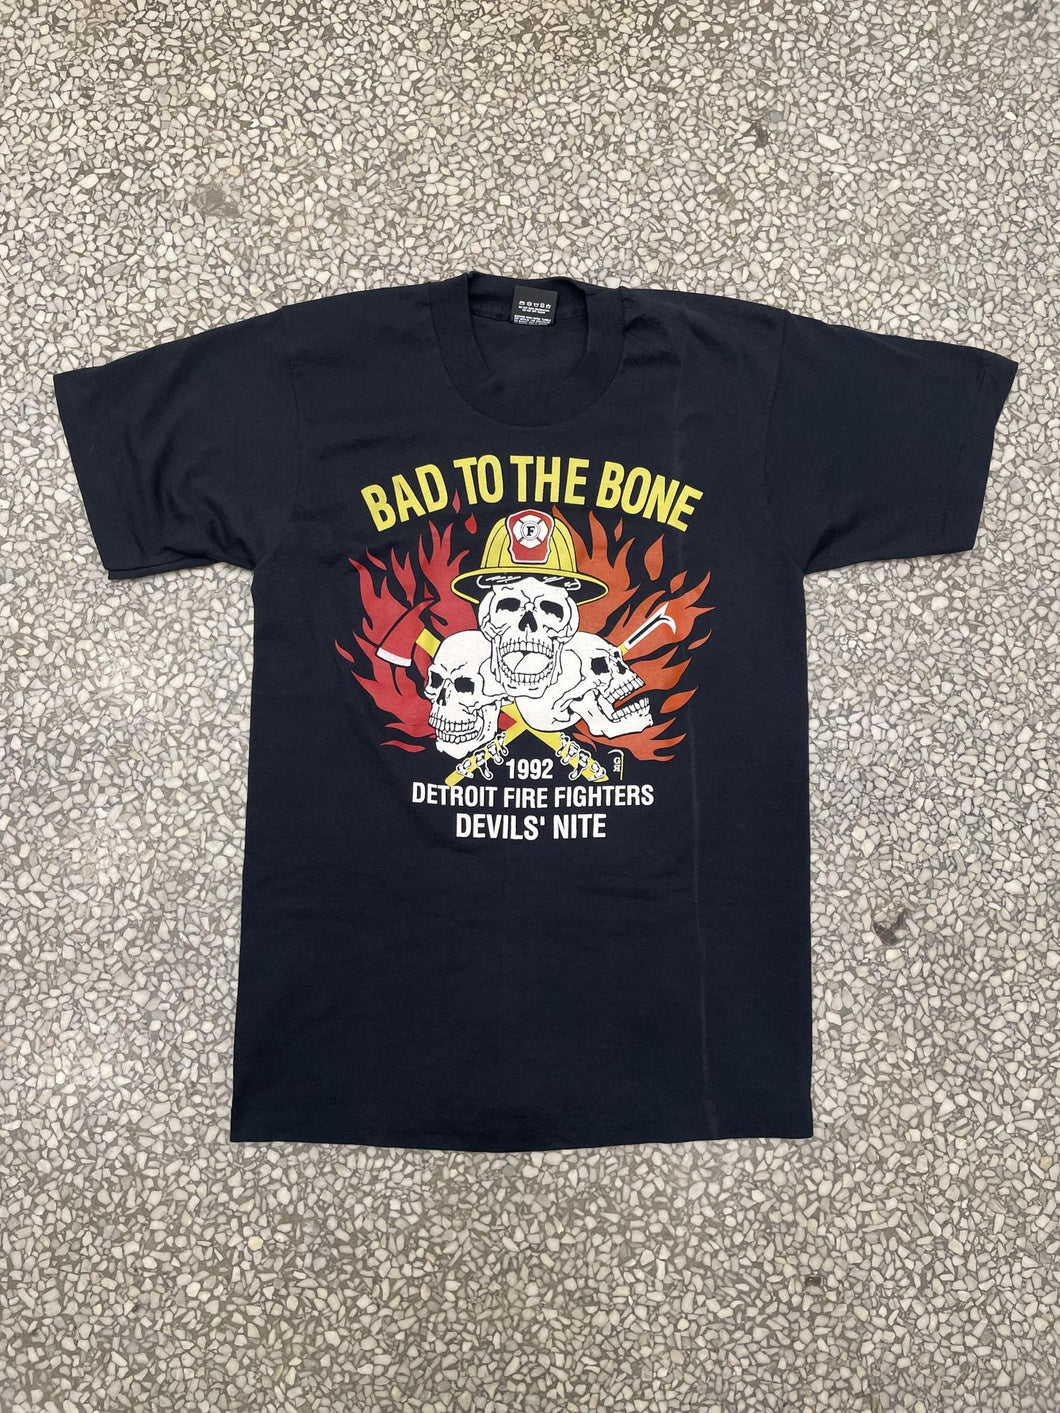 Detroit Fire Fighters Devils' Nite Vintage 1992 Bad To The Bone ABC Vintage 